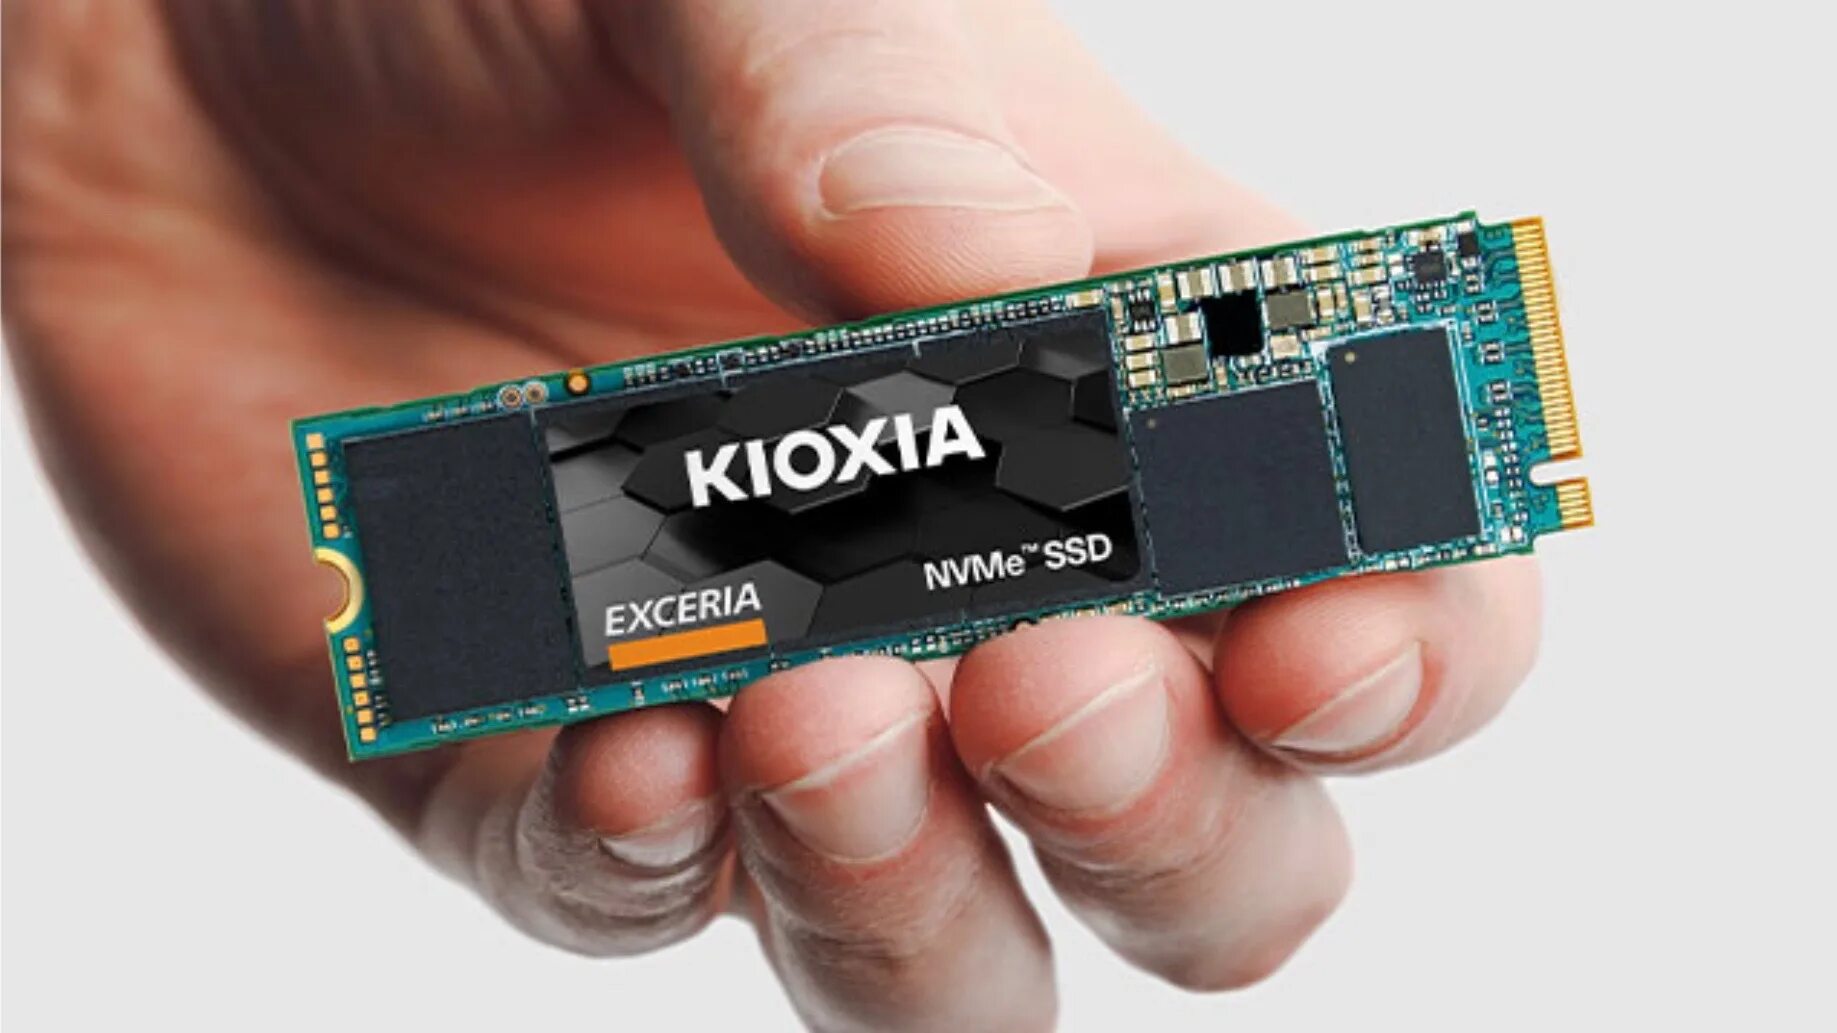 Чип памяти ssd. NVME kioxia. SSD m2 NVME. SSD накопитель kioxia Exceria g2 NVME TB. SSD новая поколения.